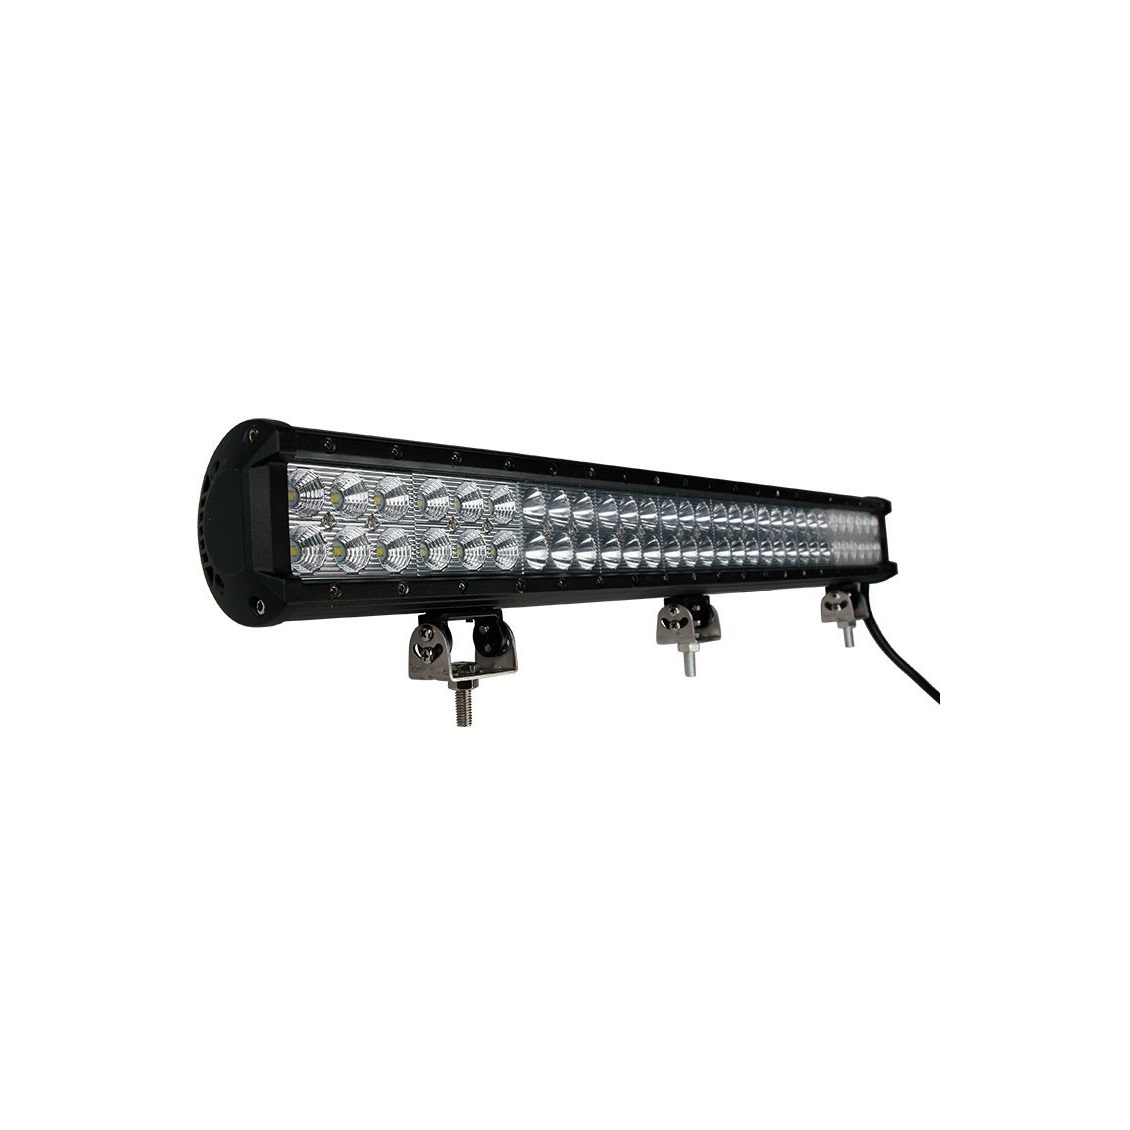 SHARK LED EPISTAR 60 - 71cm, 180W